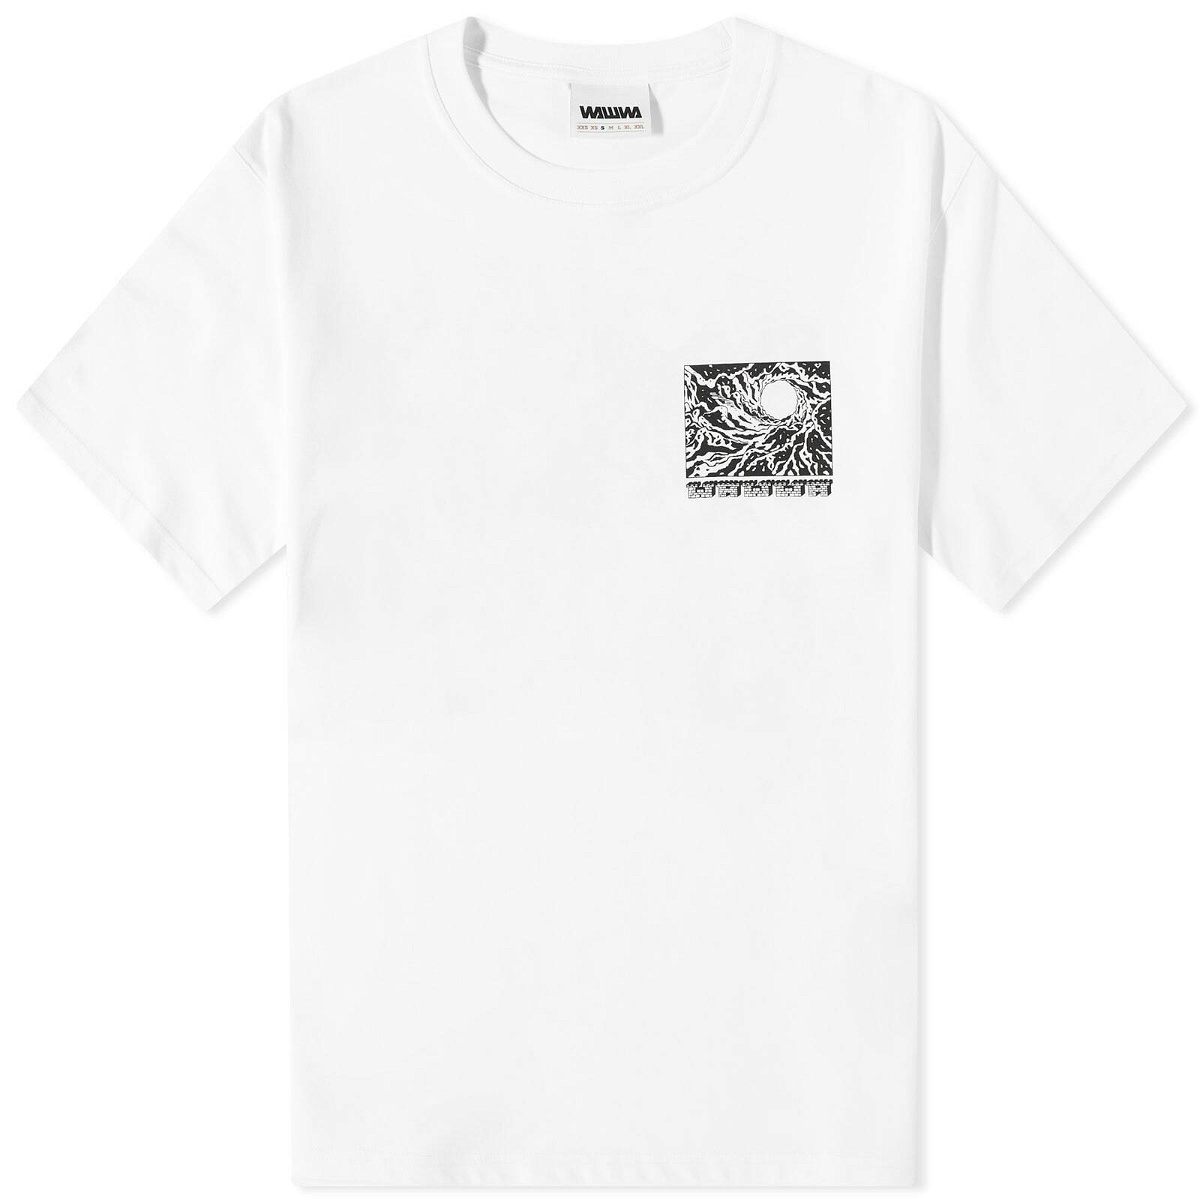 WAWWA Future Daze T-Shirt in White WAWWA